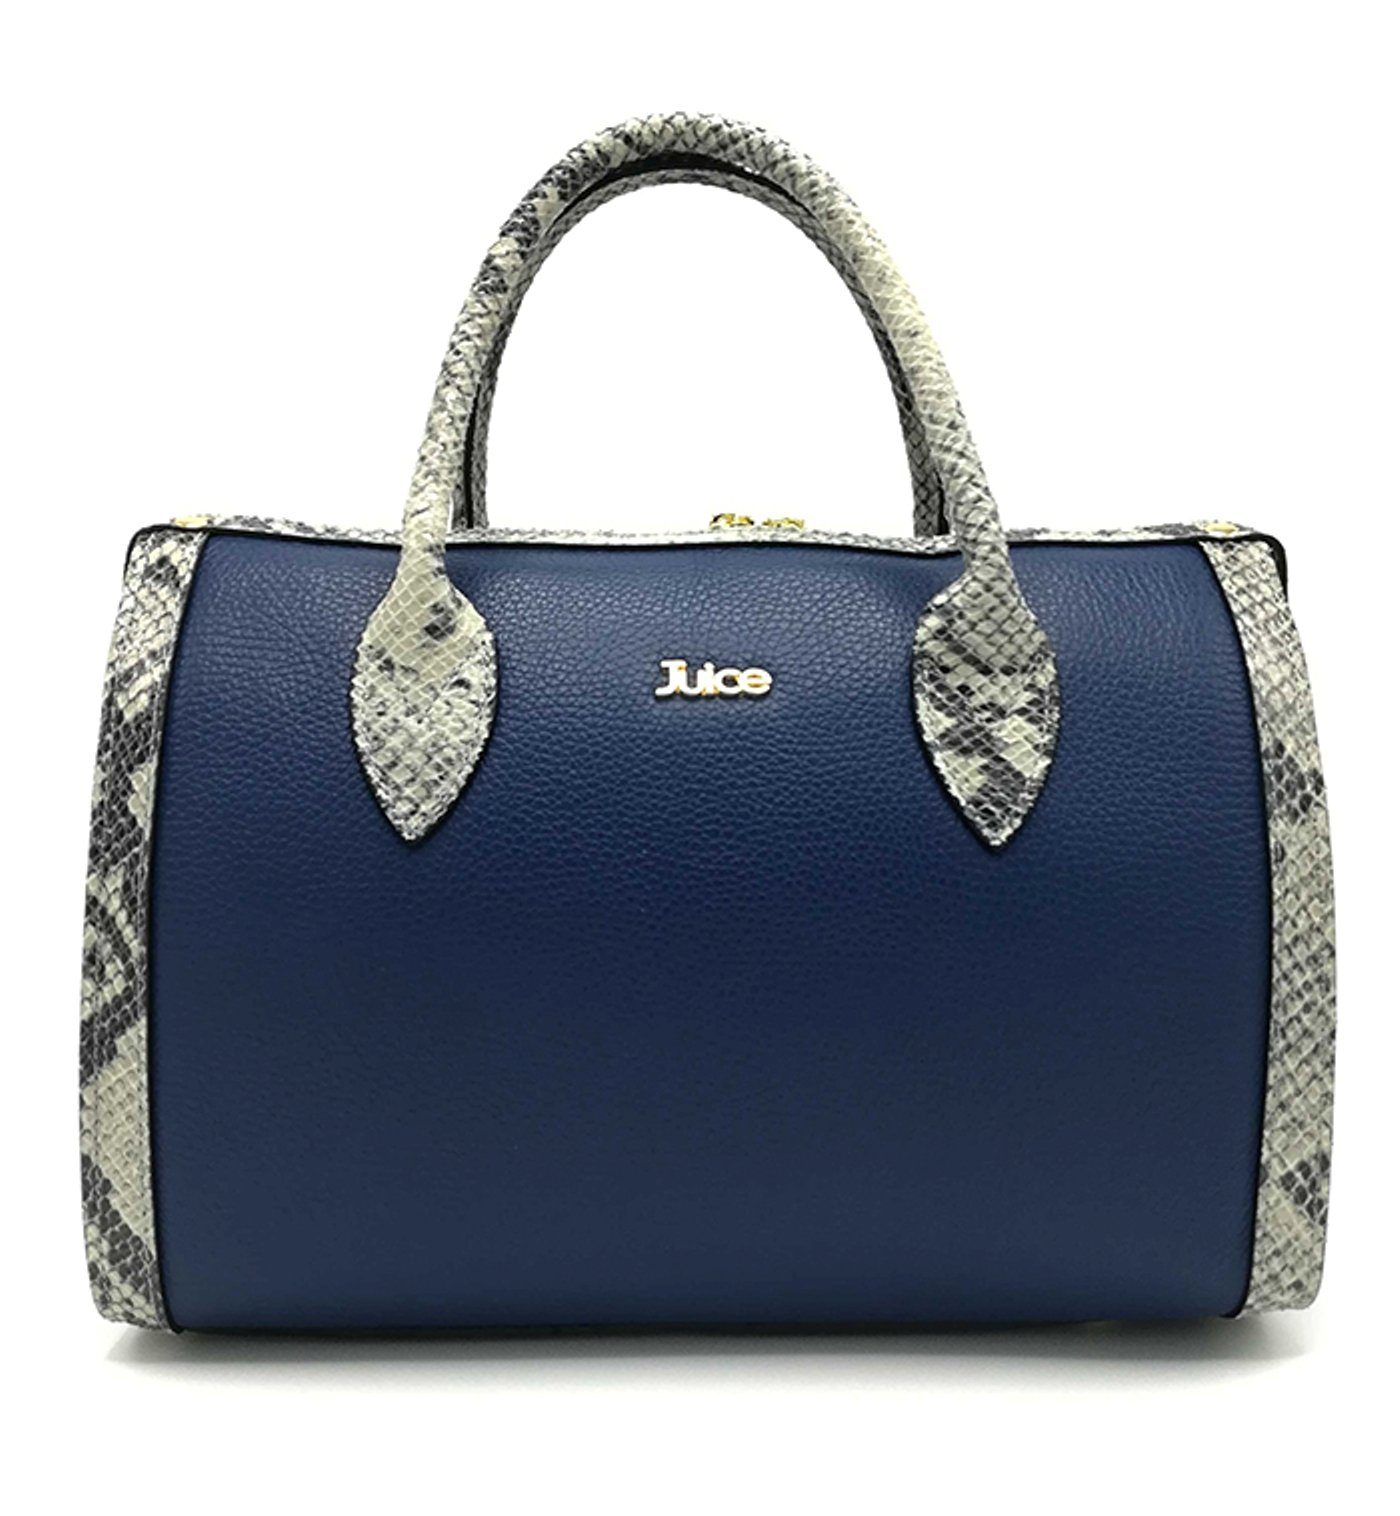 Jackson in Italy Handtasche made Company & Ava blau-beige echtes Leder VIVIANA,